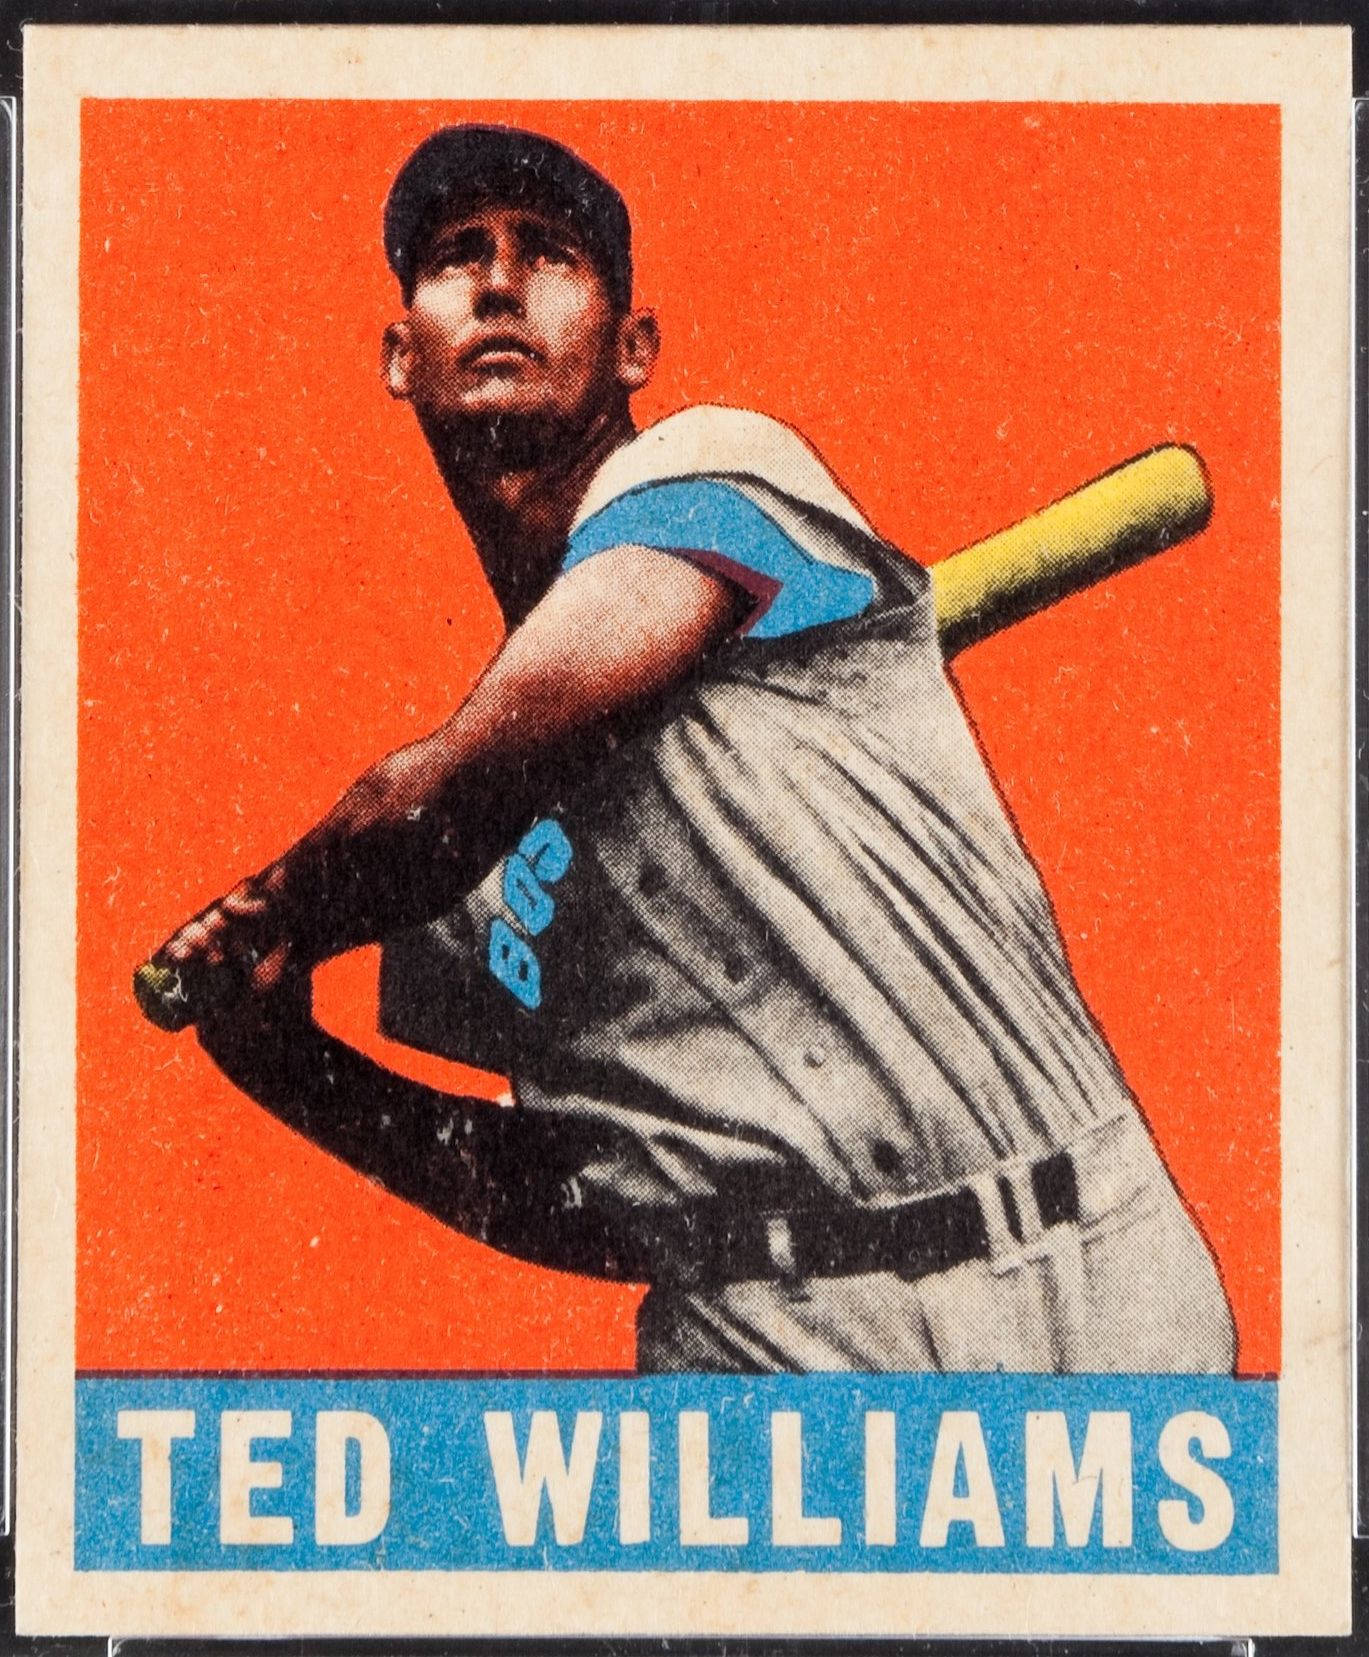 Ted Williams Vintage Baseball Card Background